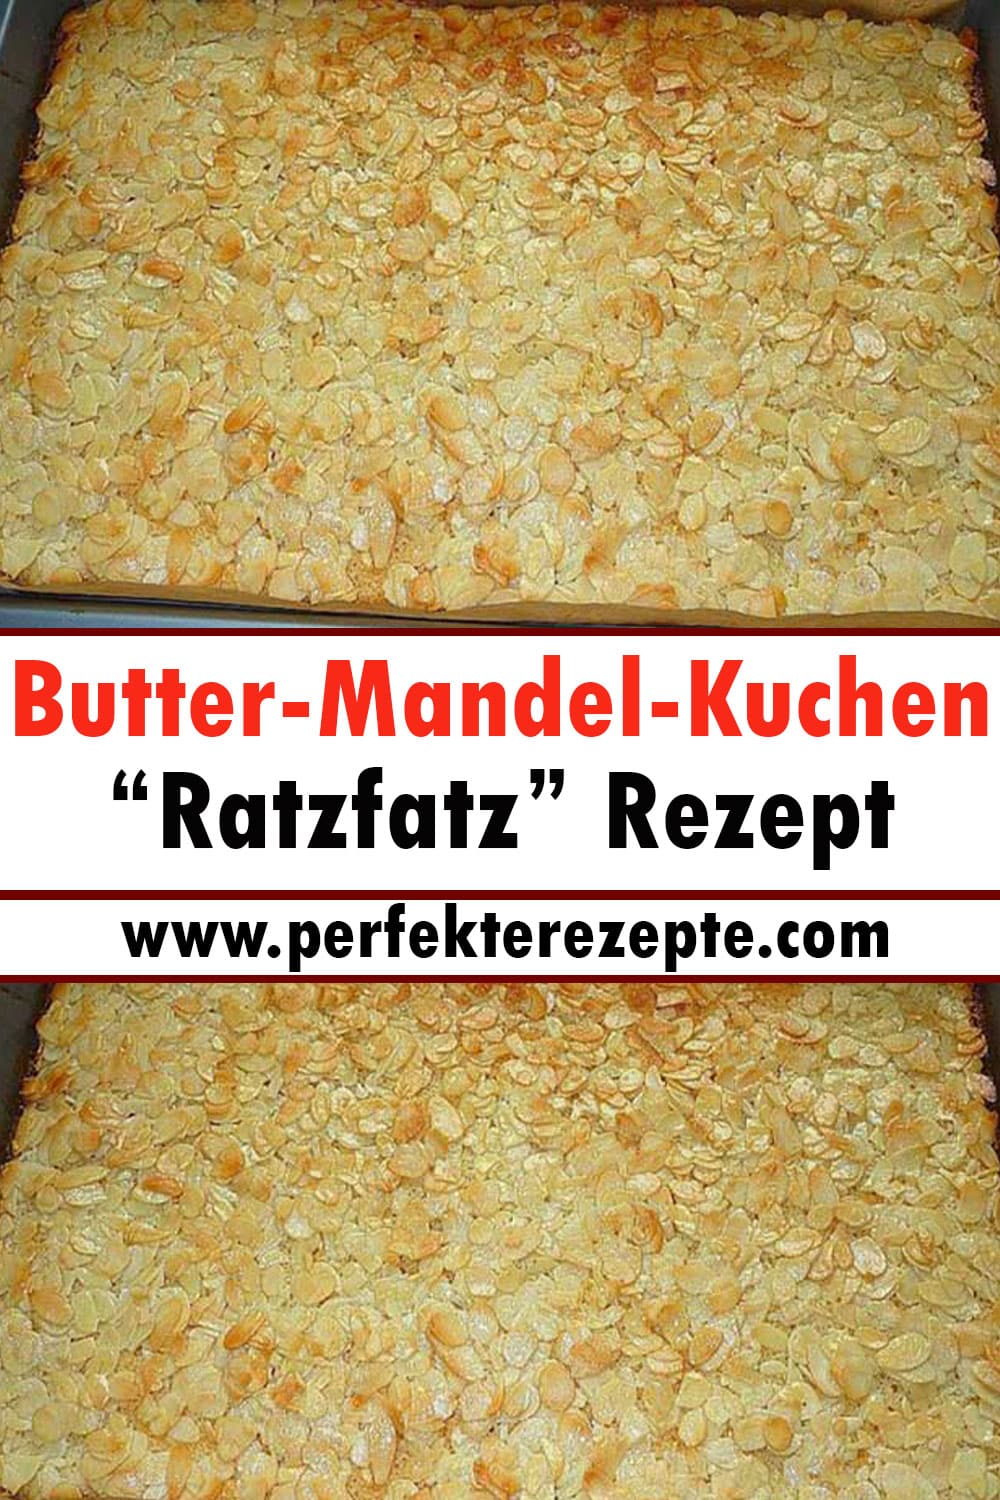 Butter-Mandel-Kuchen “Ratzfatz” Rezept